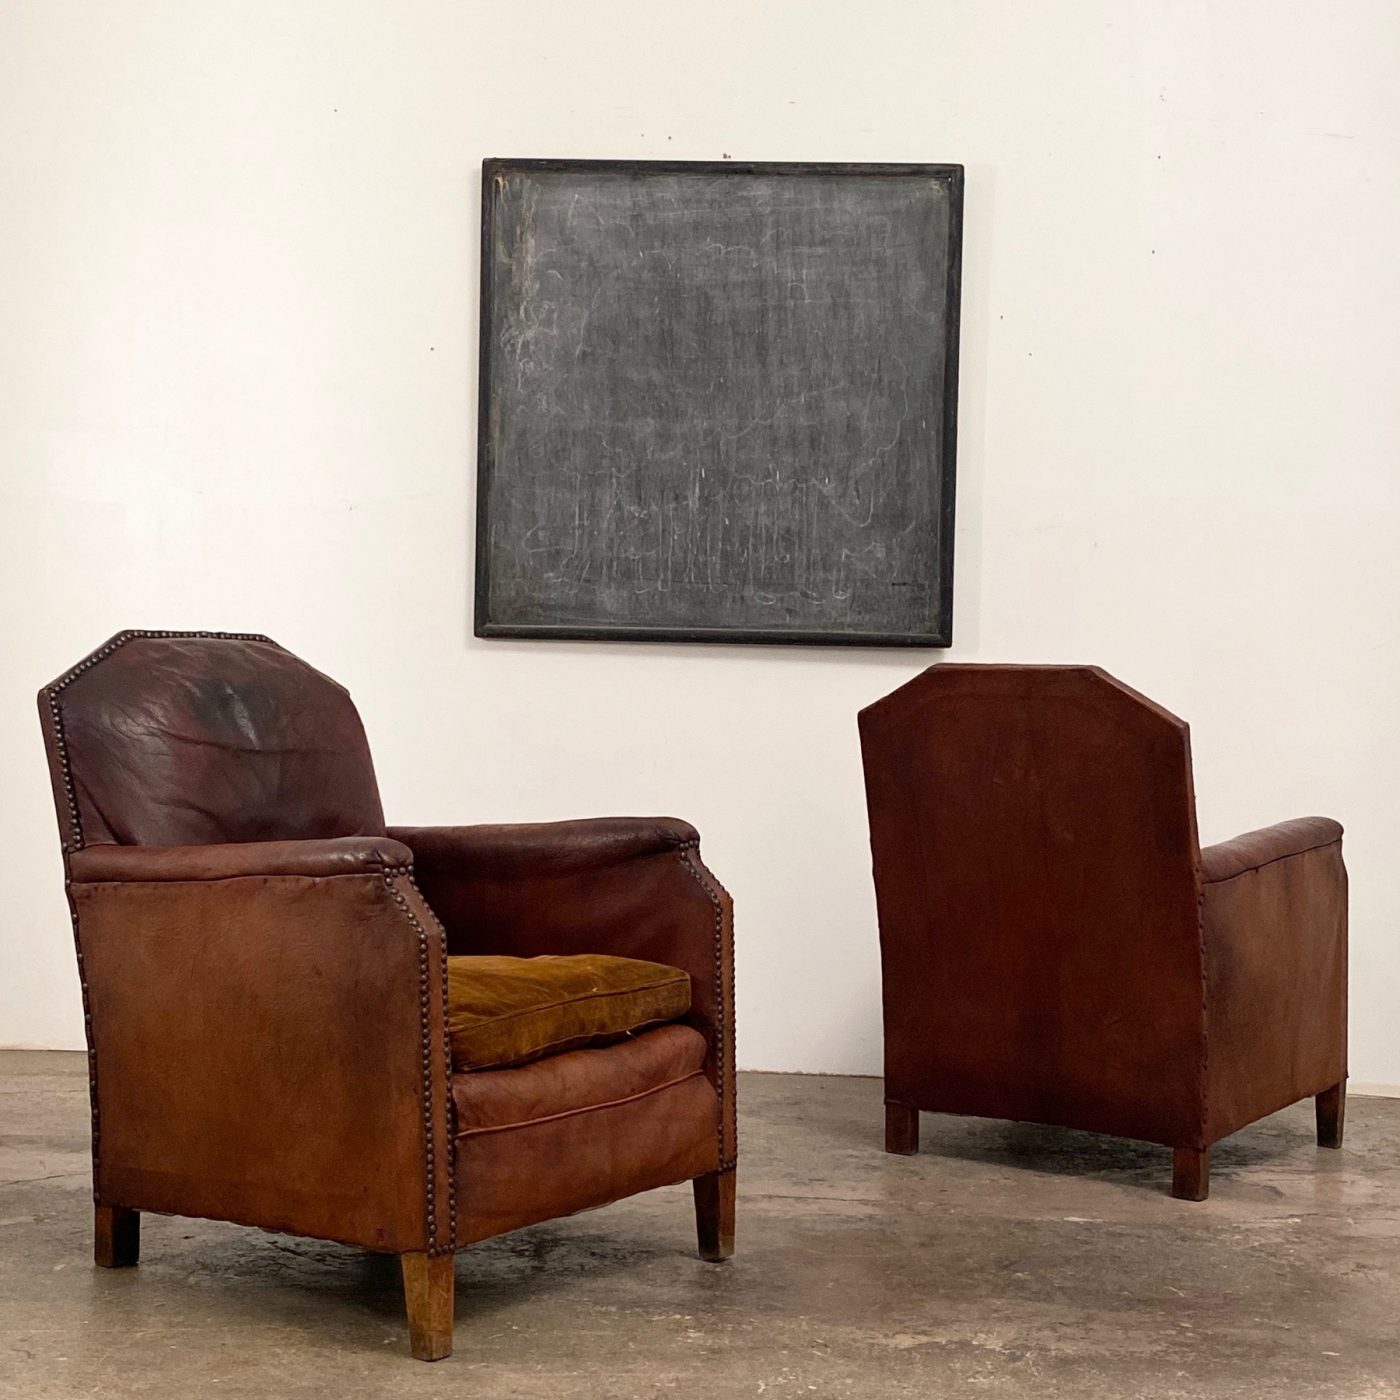 objet-vagabond-leather -armchairs0003